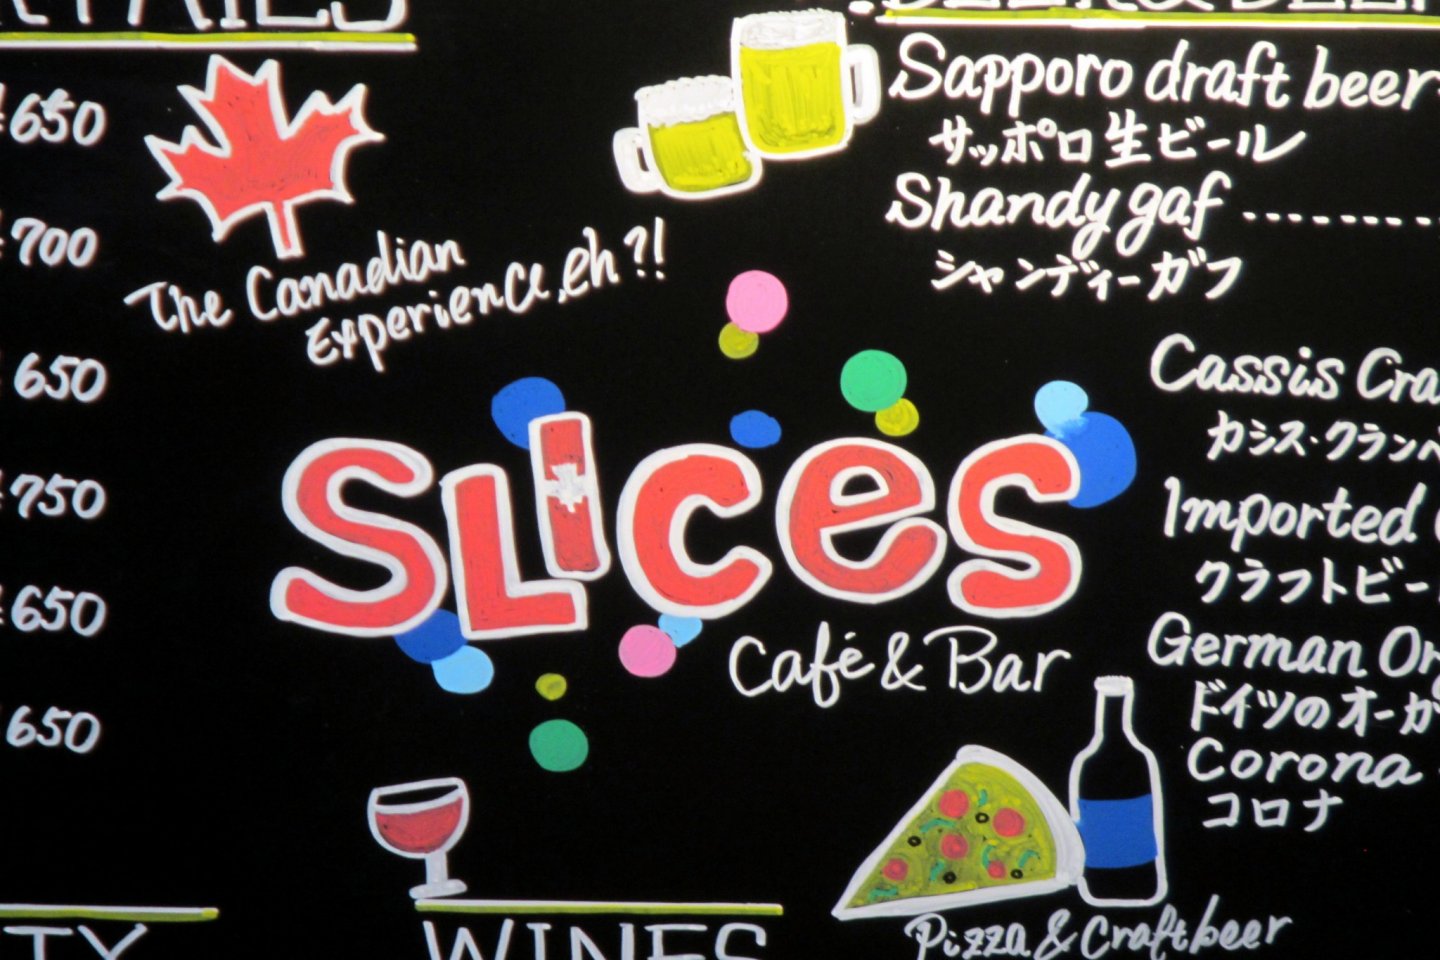 Slices' logo